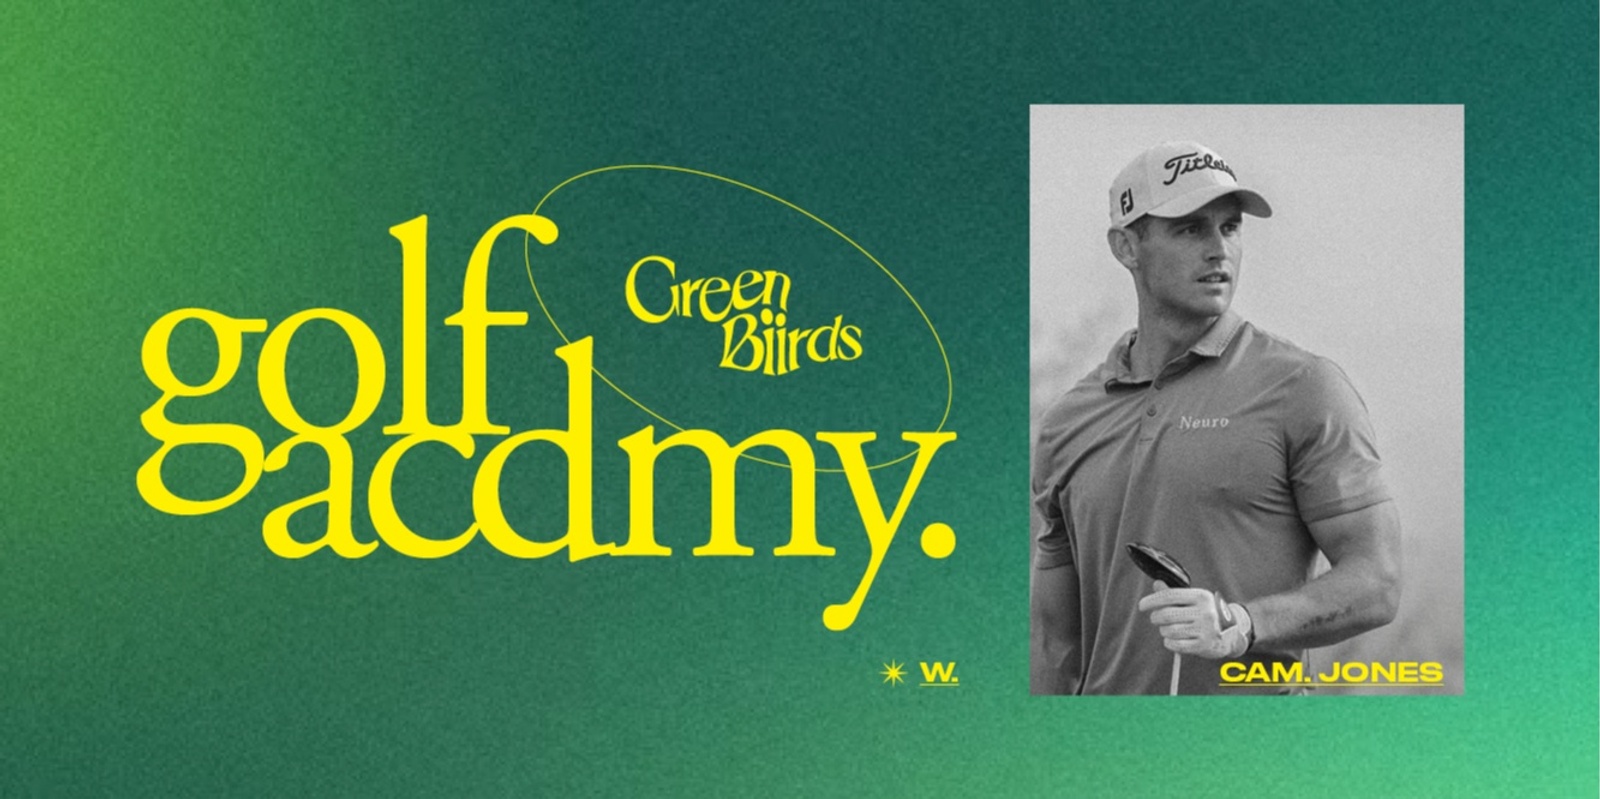 Banner image for Greenbiirds Golf Acdmy ✖️ Cam Jones Golf